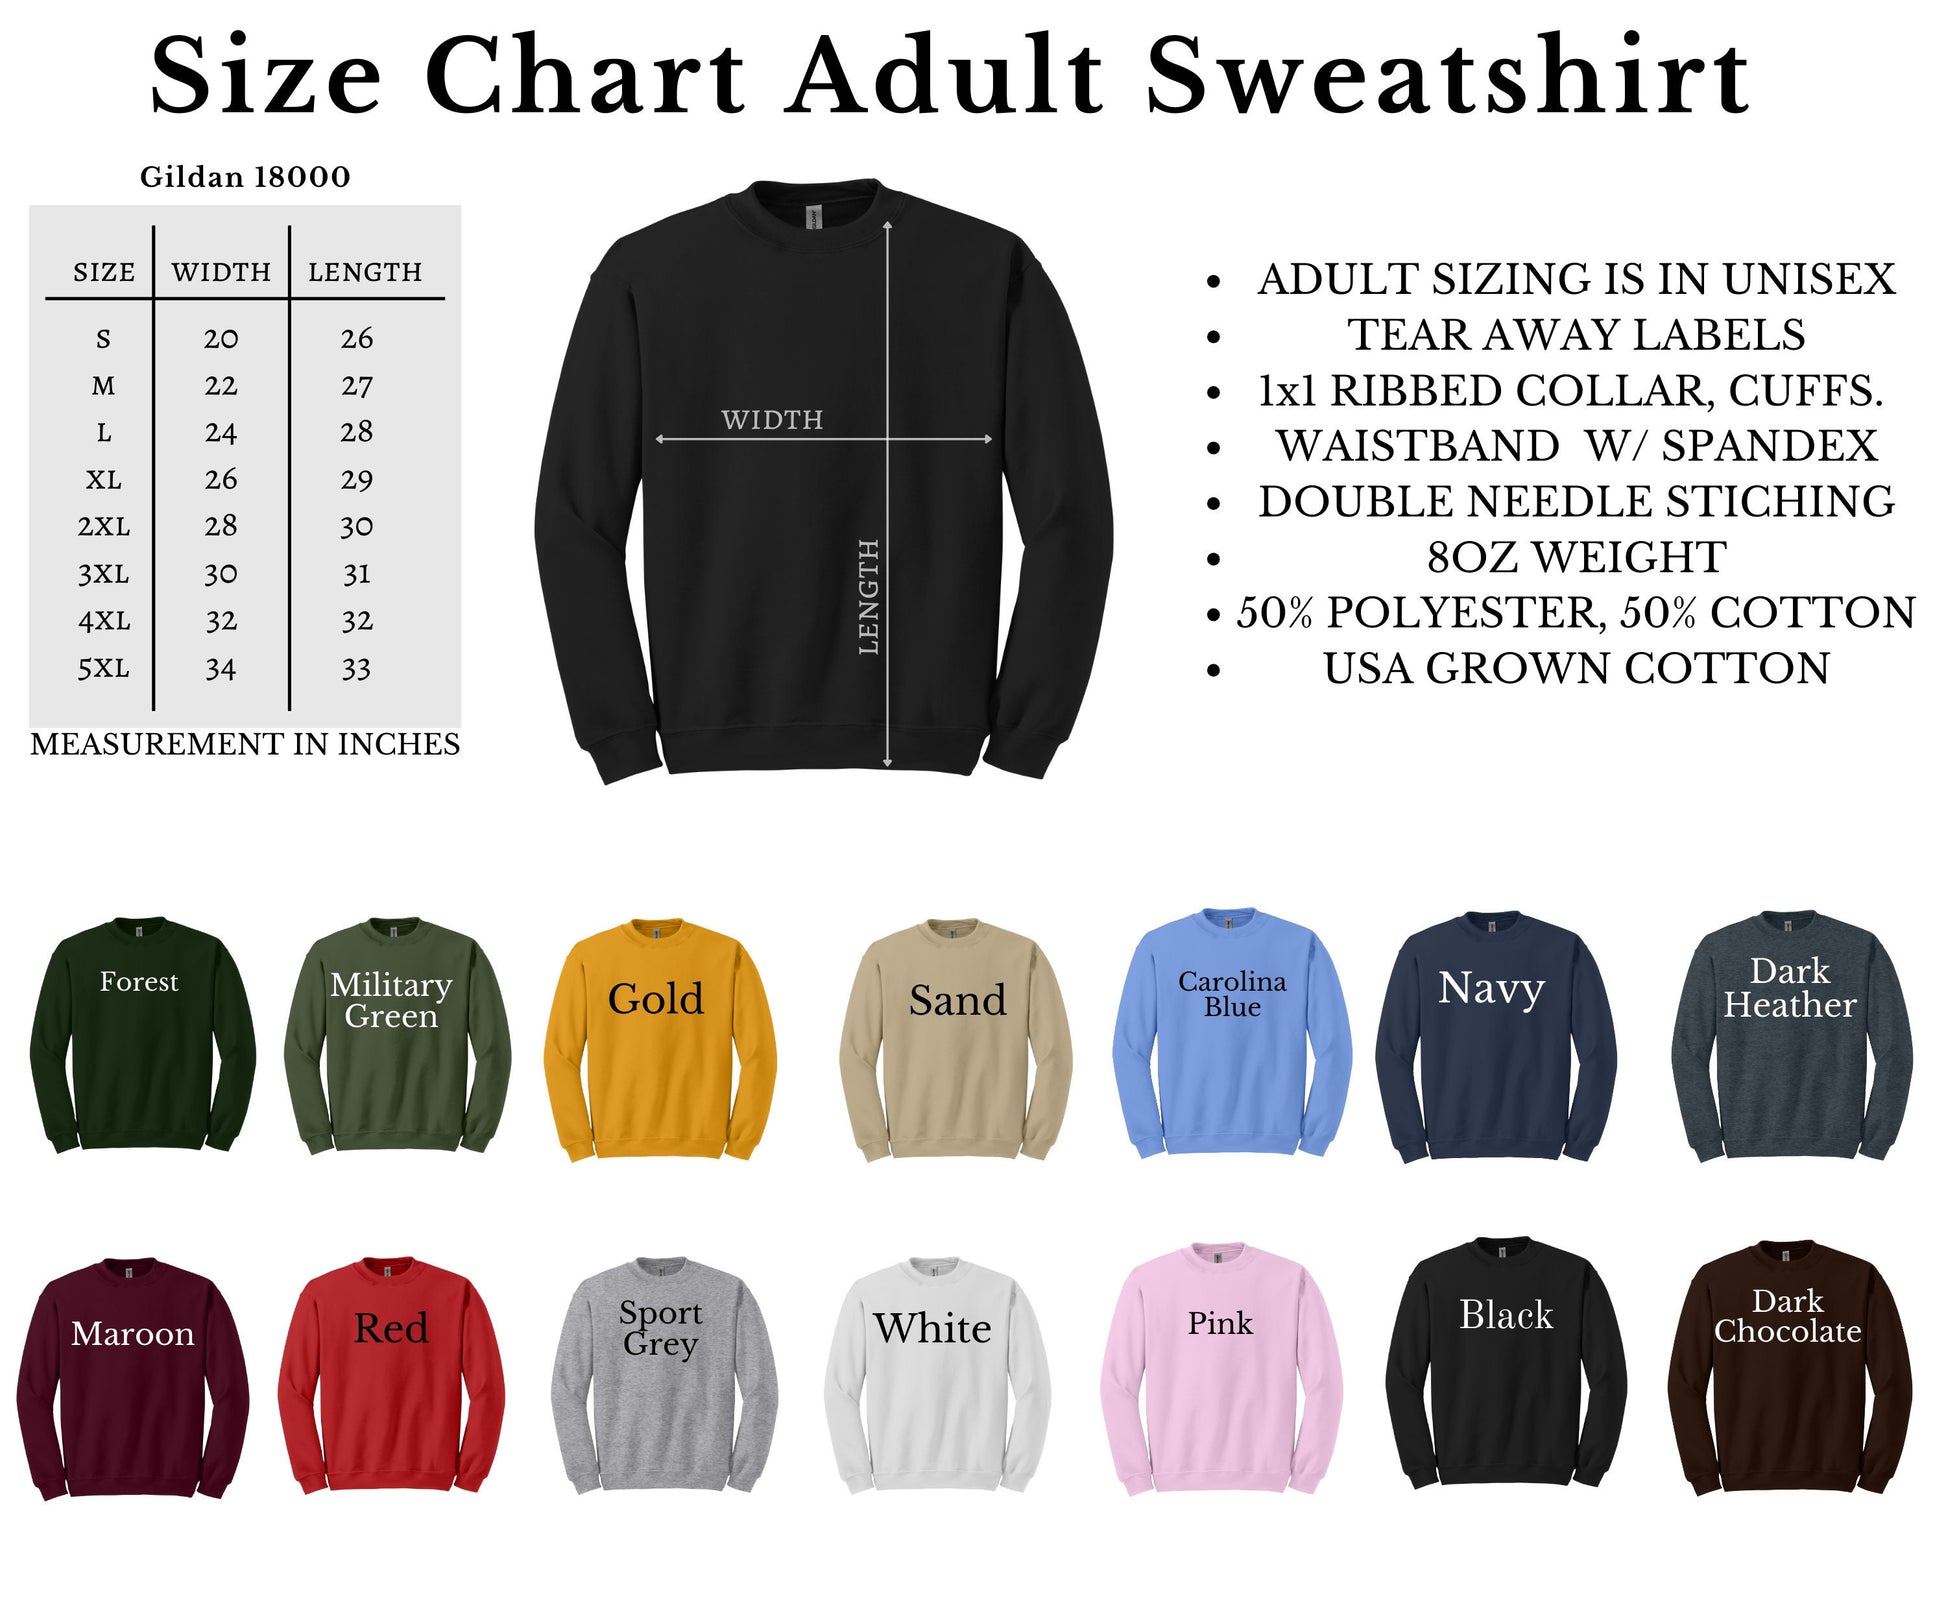 I Am Enough Sweatshirt, I am Enough Shirt, I Am Enough Crewneck, i Am Enough Sweater, Oversized Sweater, Comfy Sweatshirt, Mental Awareness